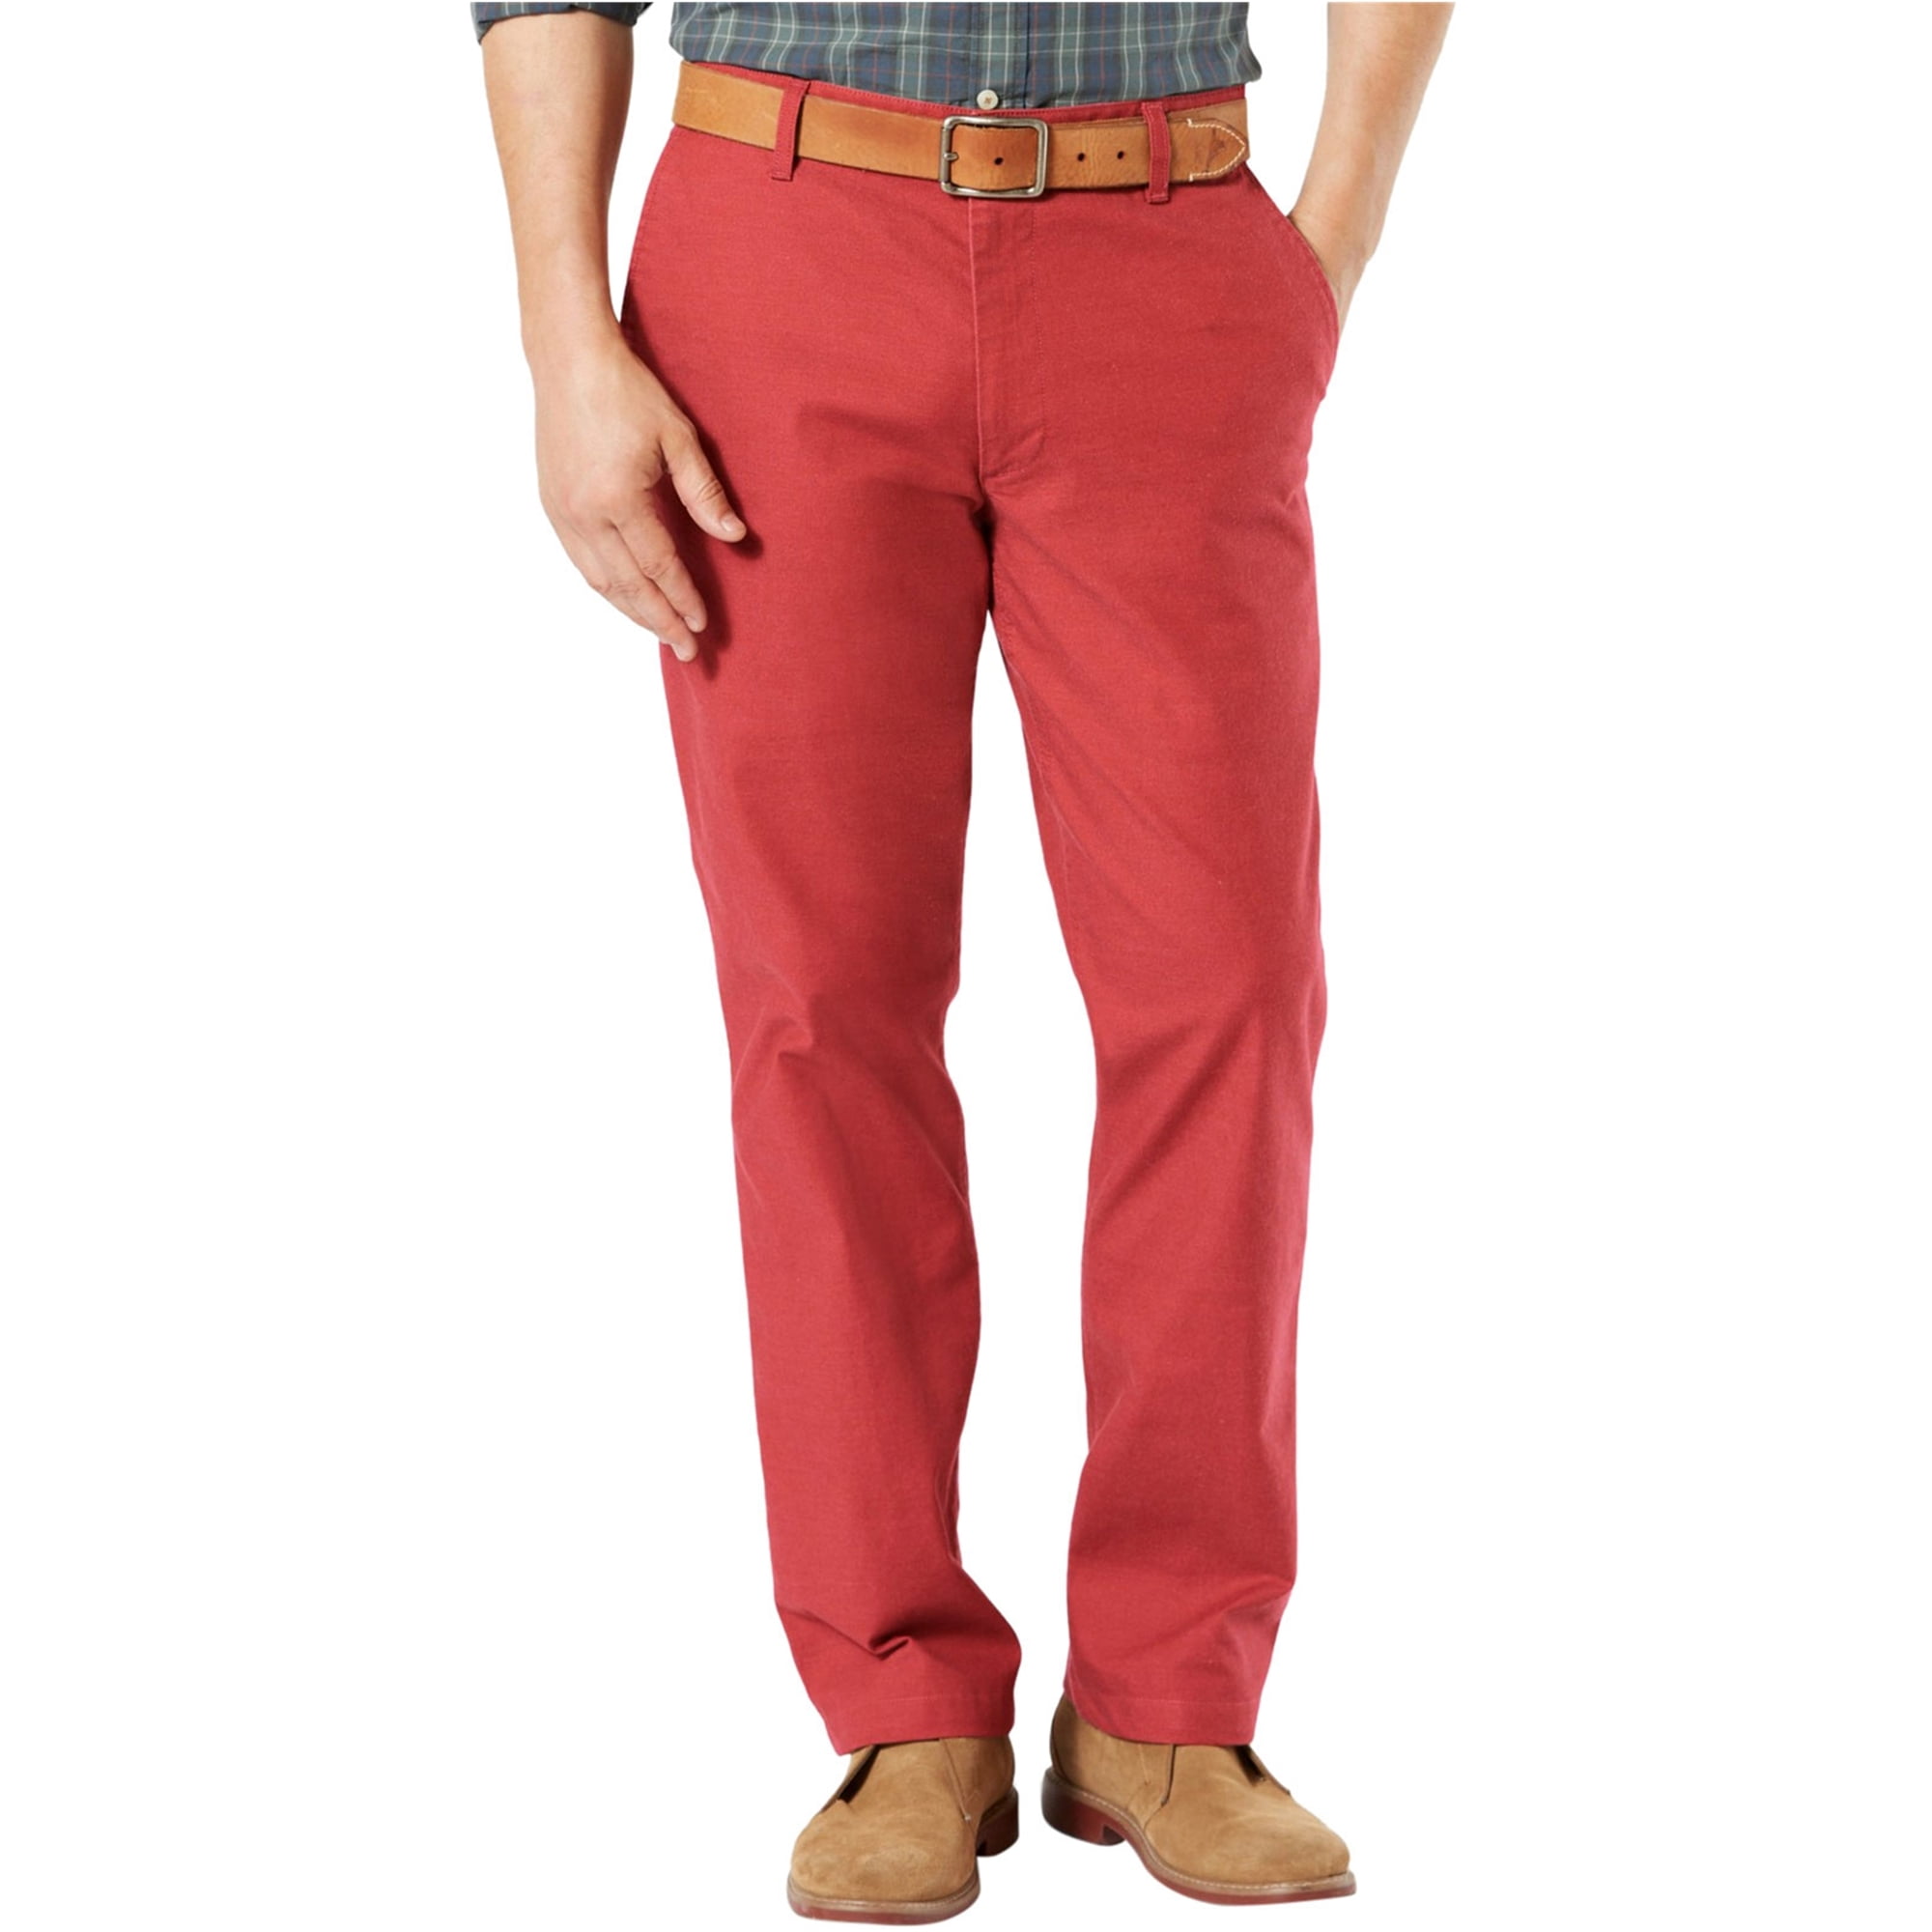 Dockers Mens Performance Casual Chino Pants, Red, 36W x 29L - Walmart.com